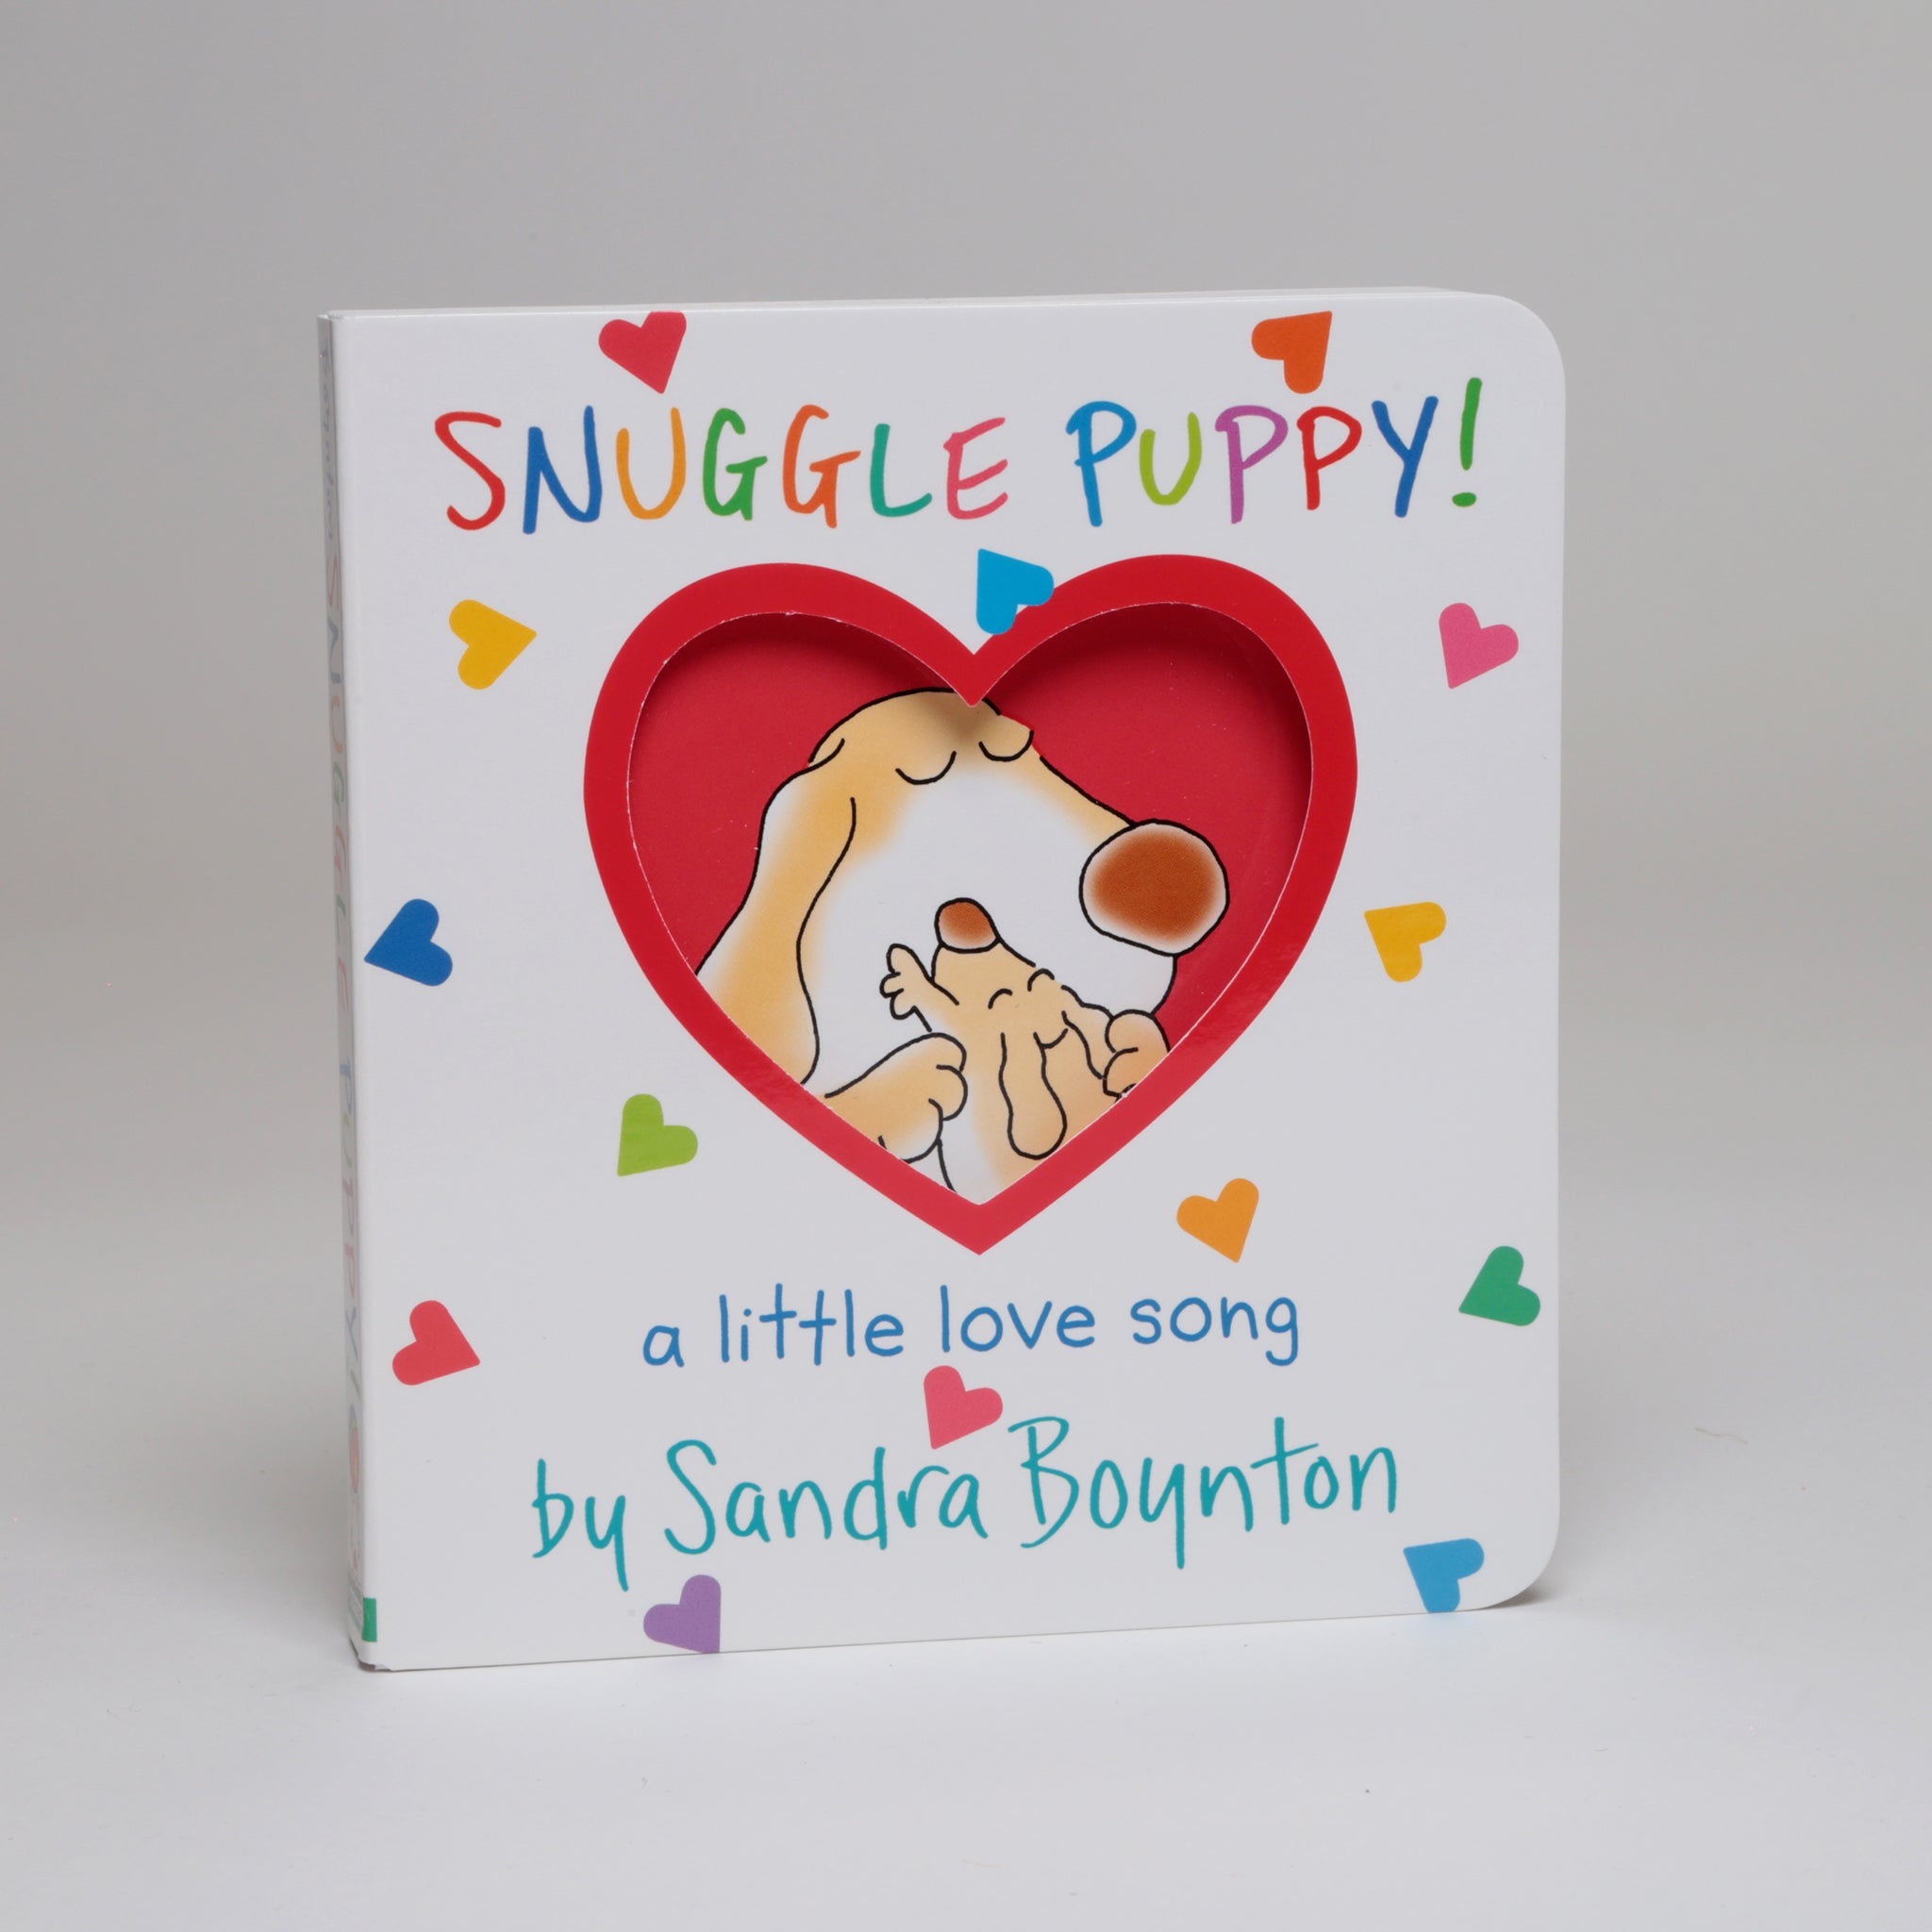 Snuggle Puppy!, By Sandra Boynton